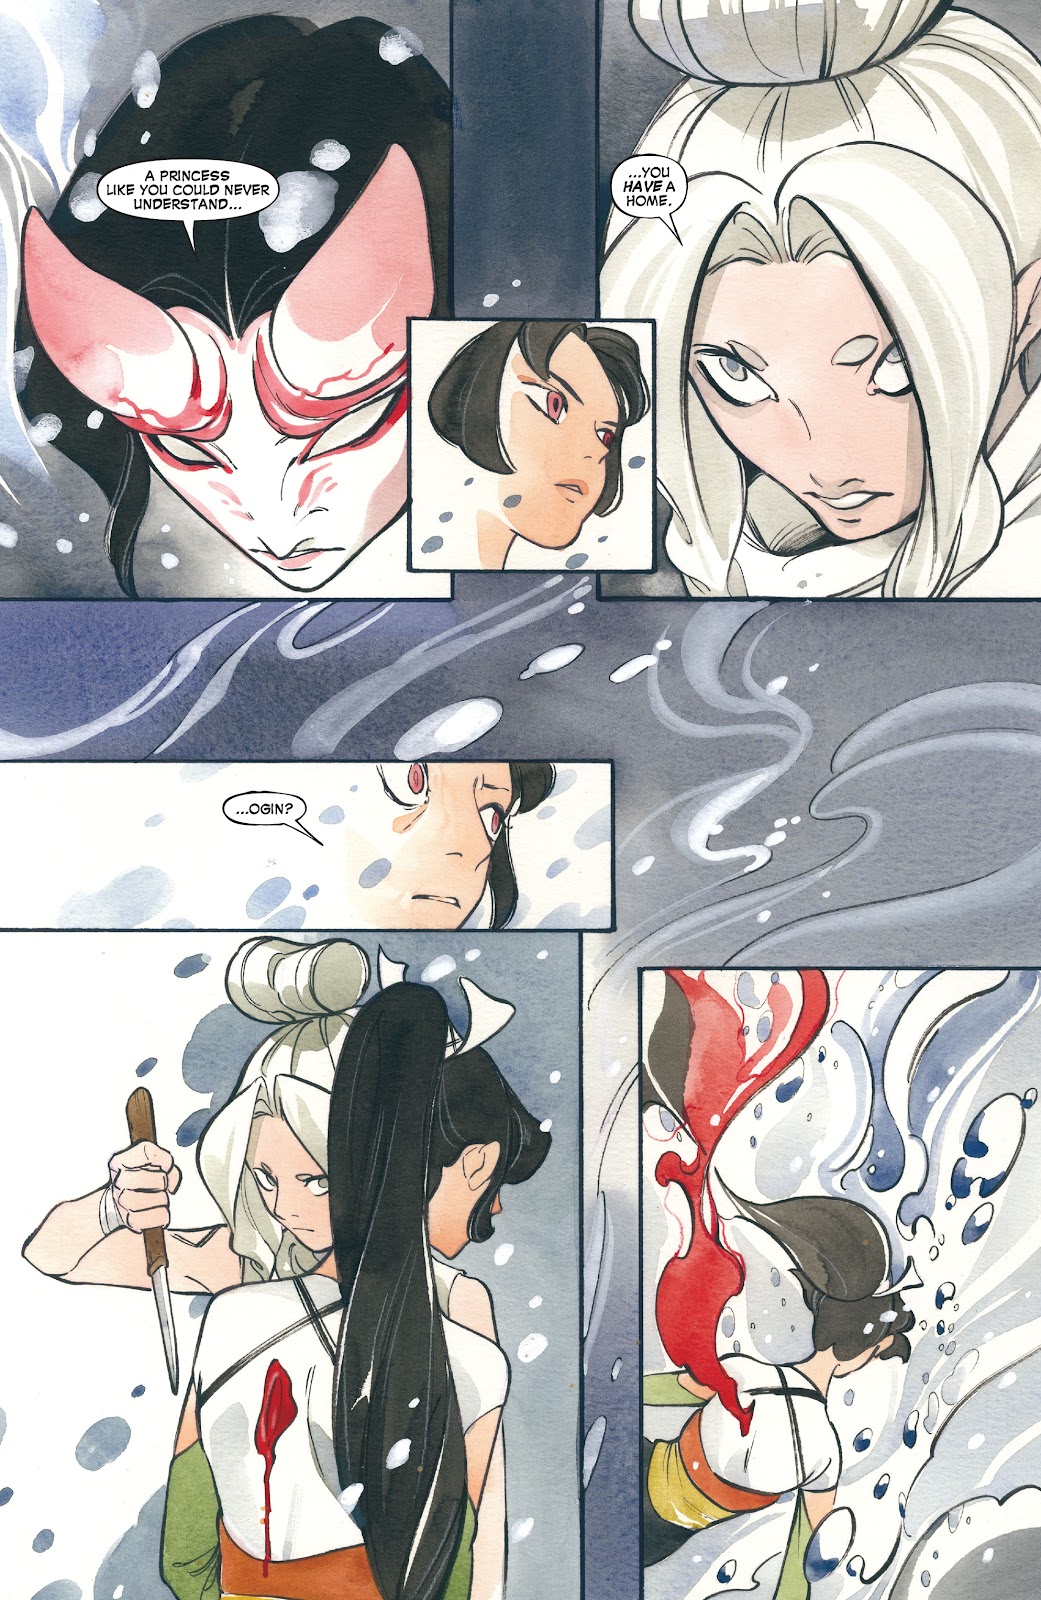 Demon Wars: Scarlet Sin issue 1 - Page 15